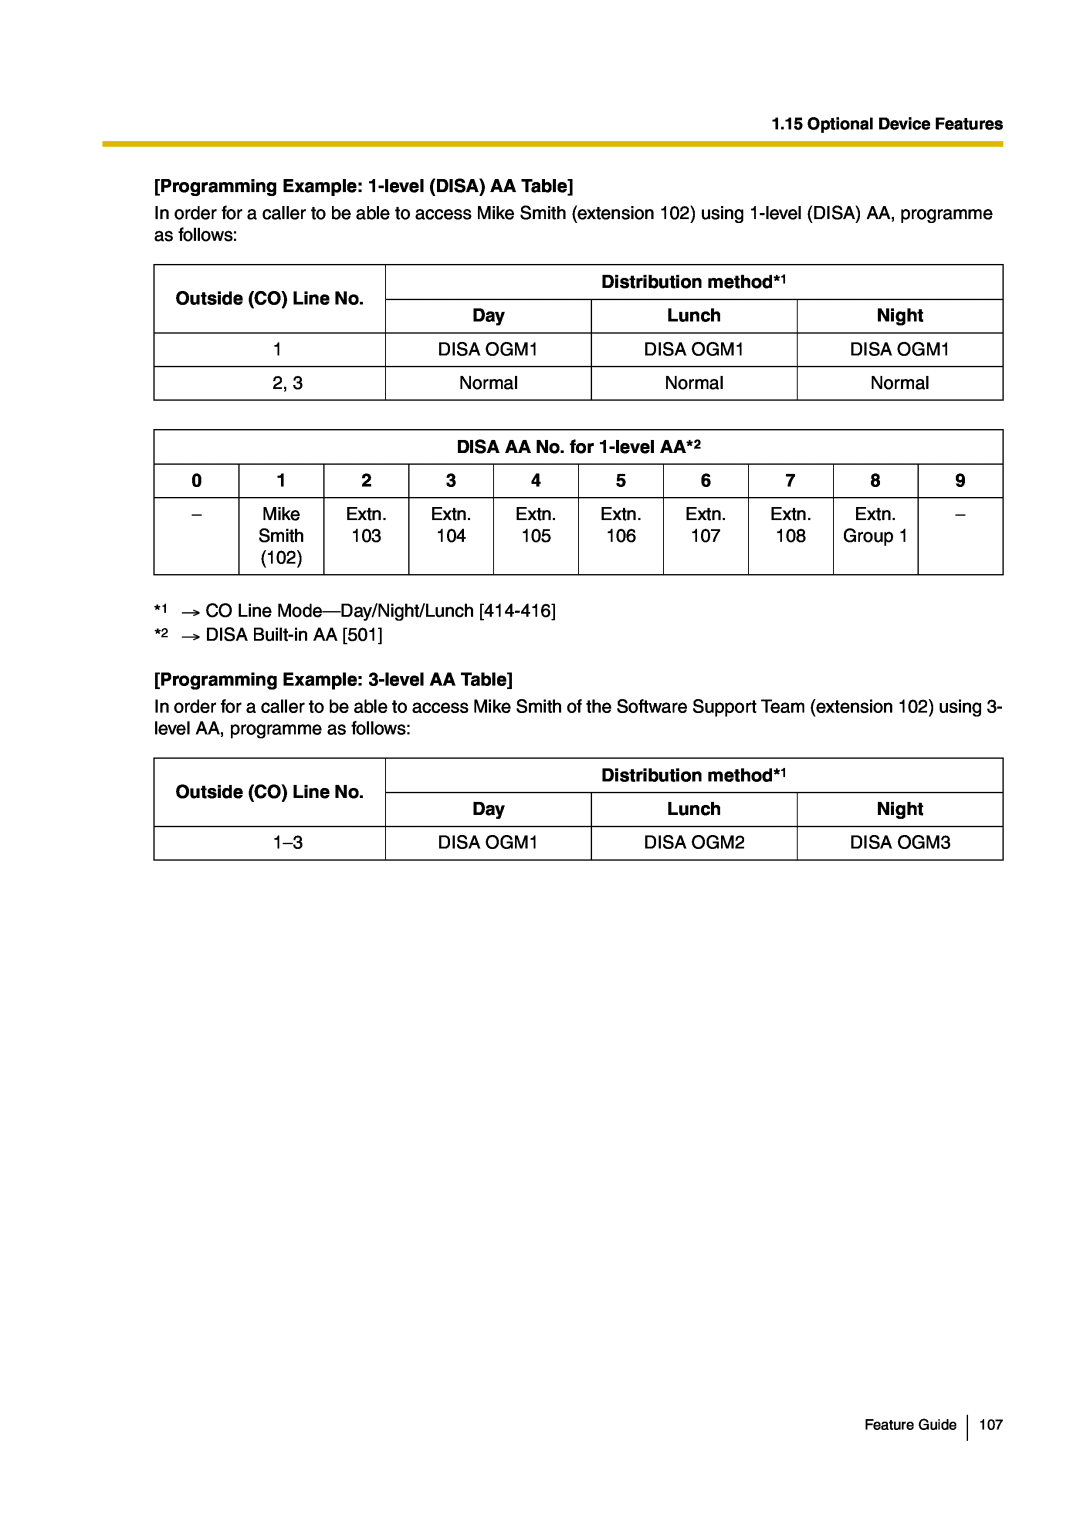 Panasonic kx-tea308 Programming Example: 1-levelDISA AA Table, Outside CO Line No, Distribution method*1, Lunch, Night 